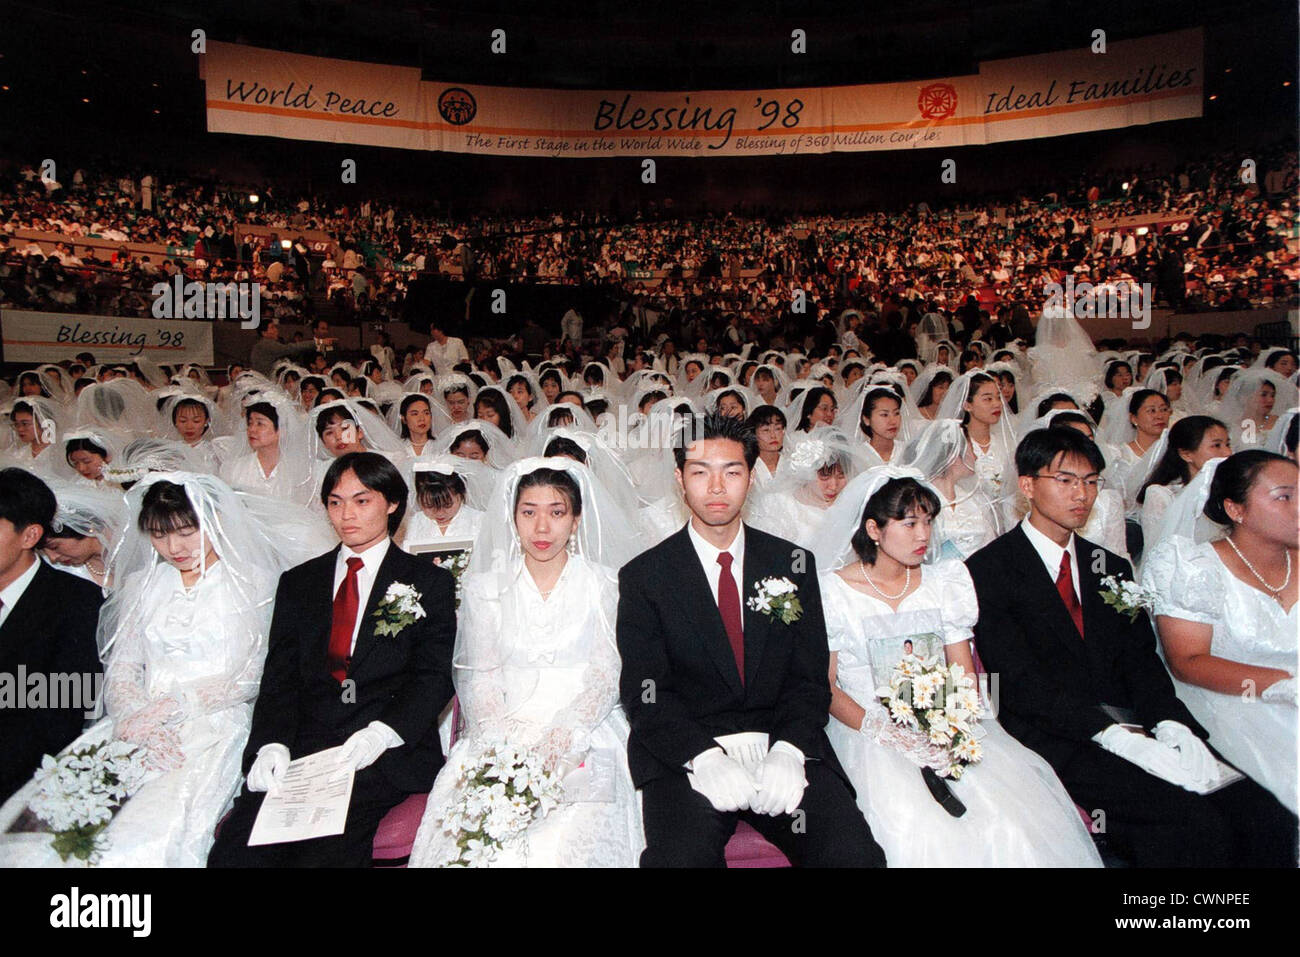 Rev. Sun Myung Moon Blessing 98 in Madison Square Garden on June 13, 1998. Stock Photo